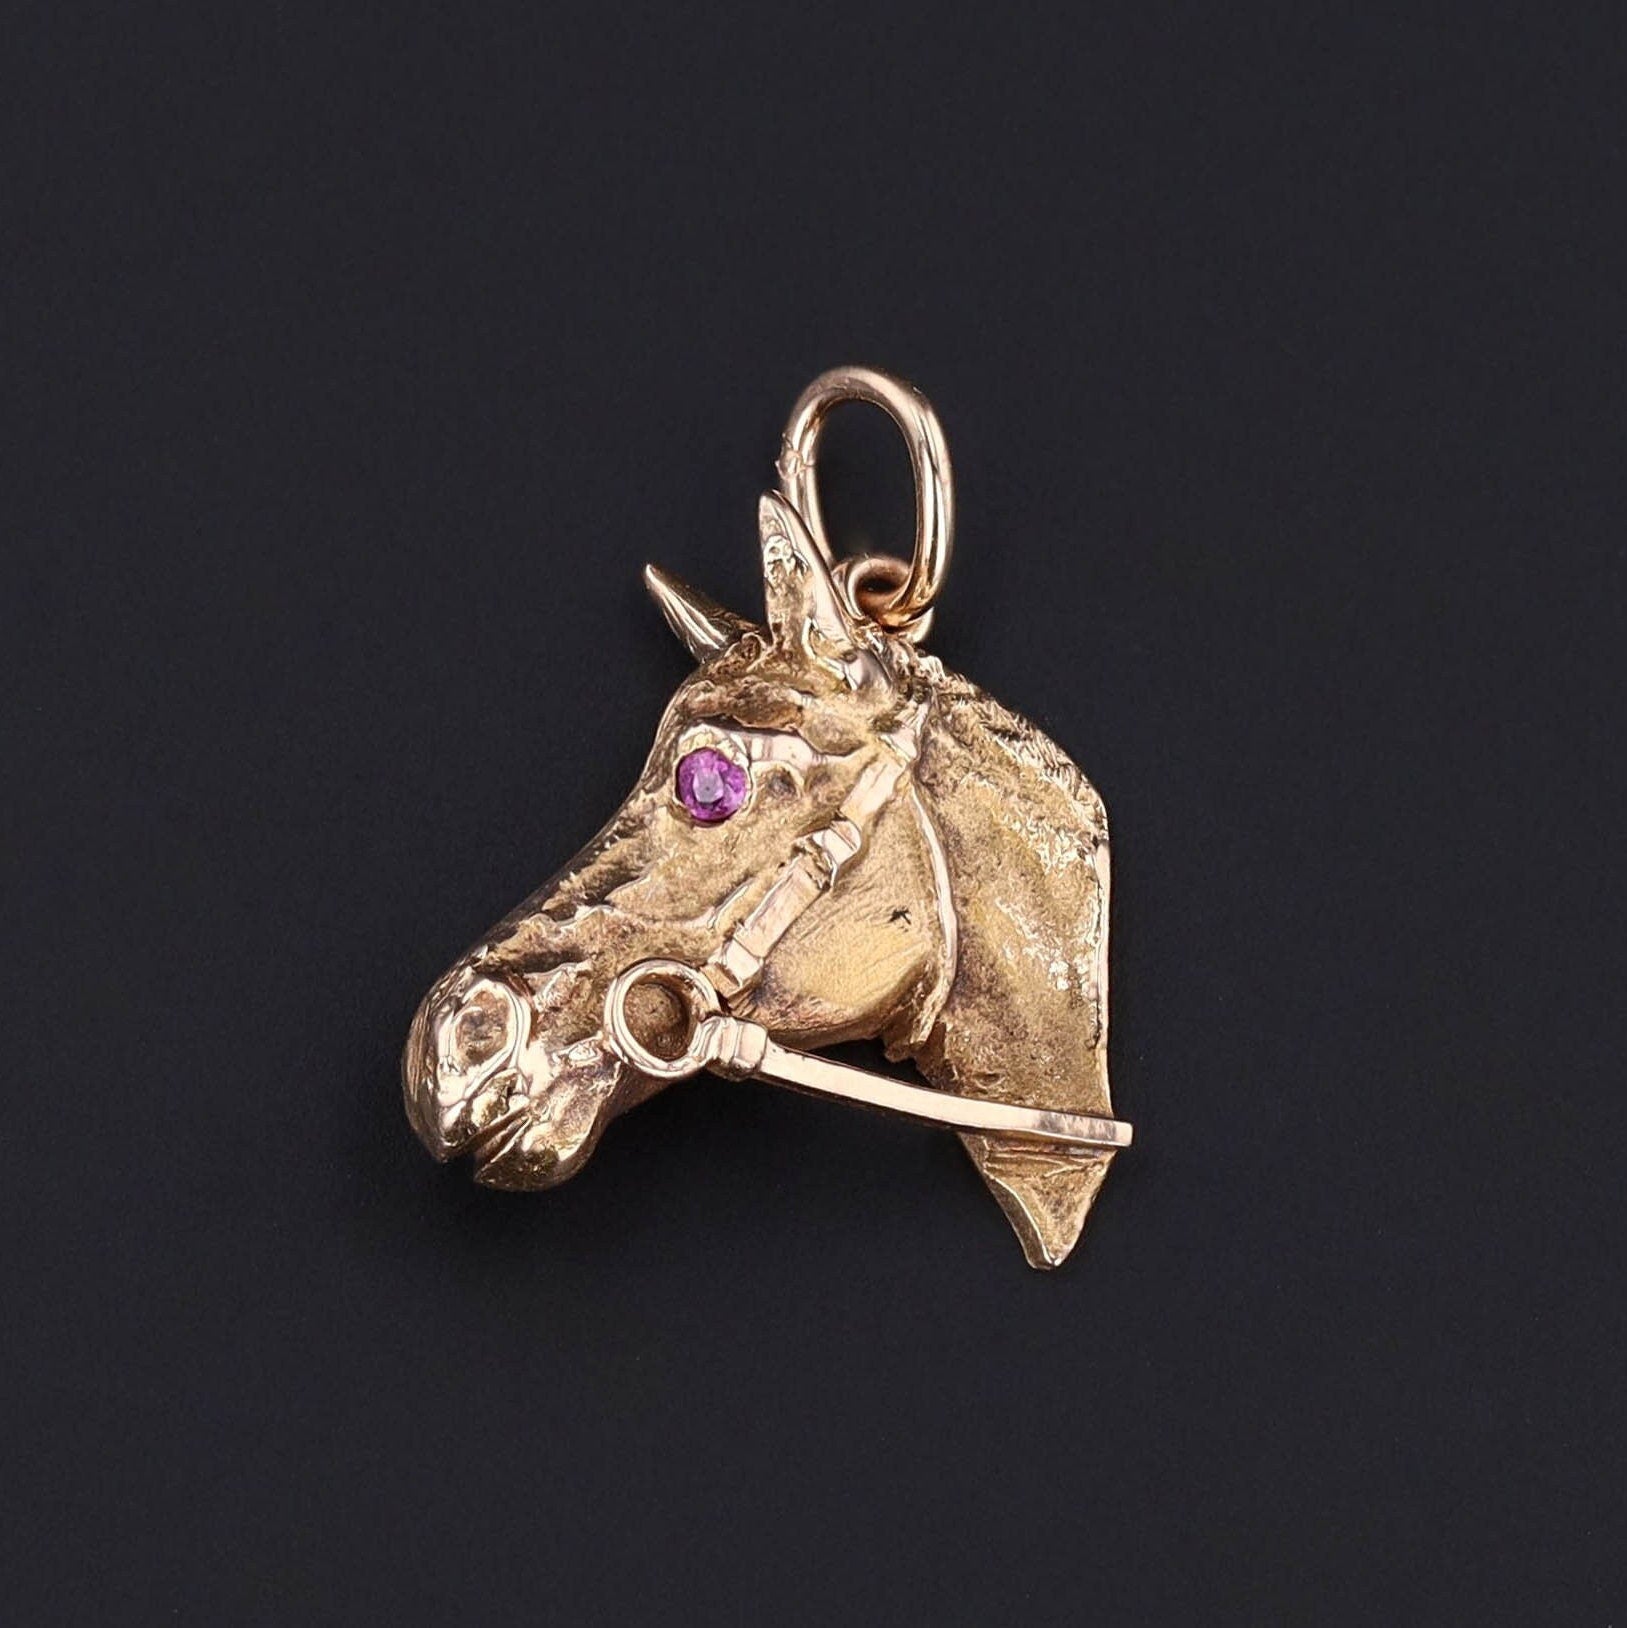 Antique Horse Conversion Charm of 14k Gold